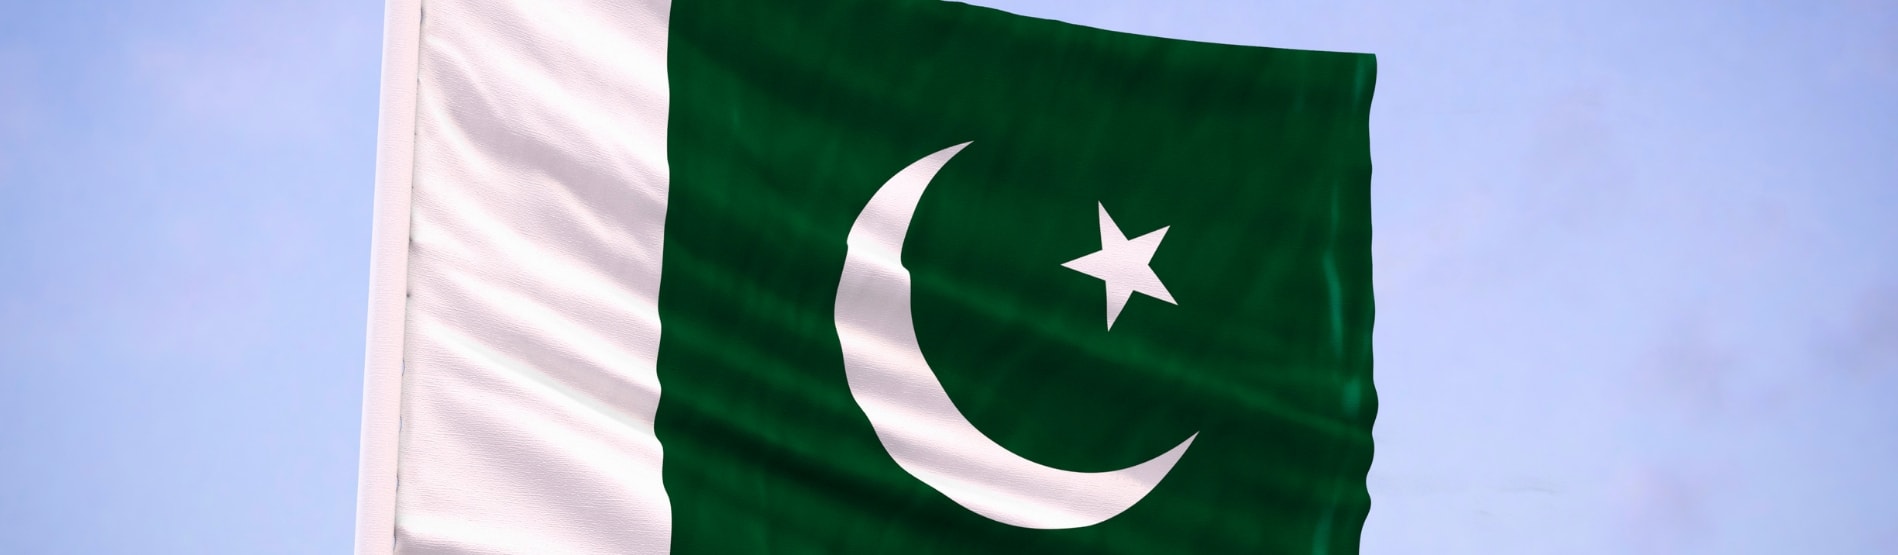 Flag of Pakistan waving in the breeze